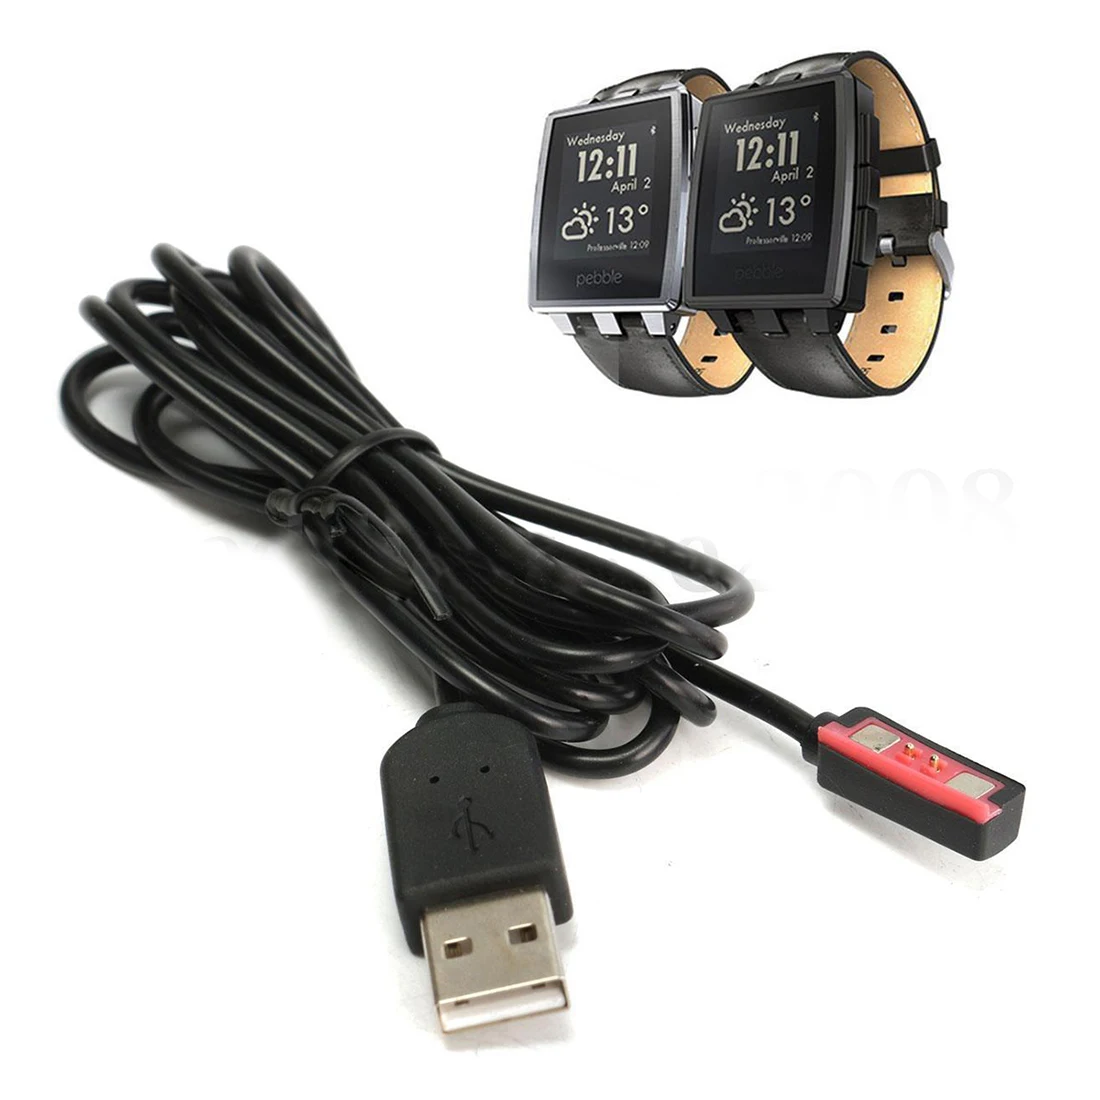 USB Megnetic зарядный кабель для гальки стали 2 Смарт-часы наручные часы